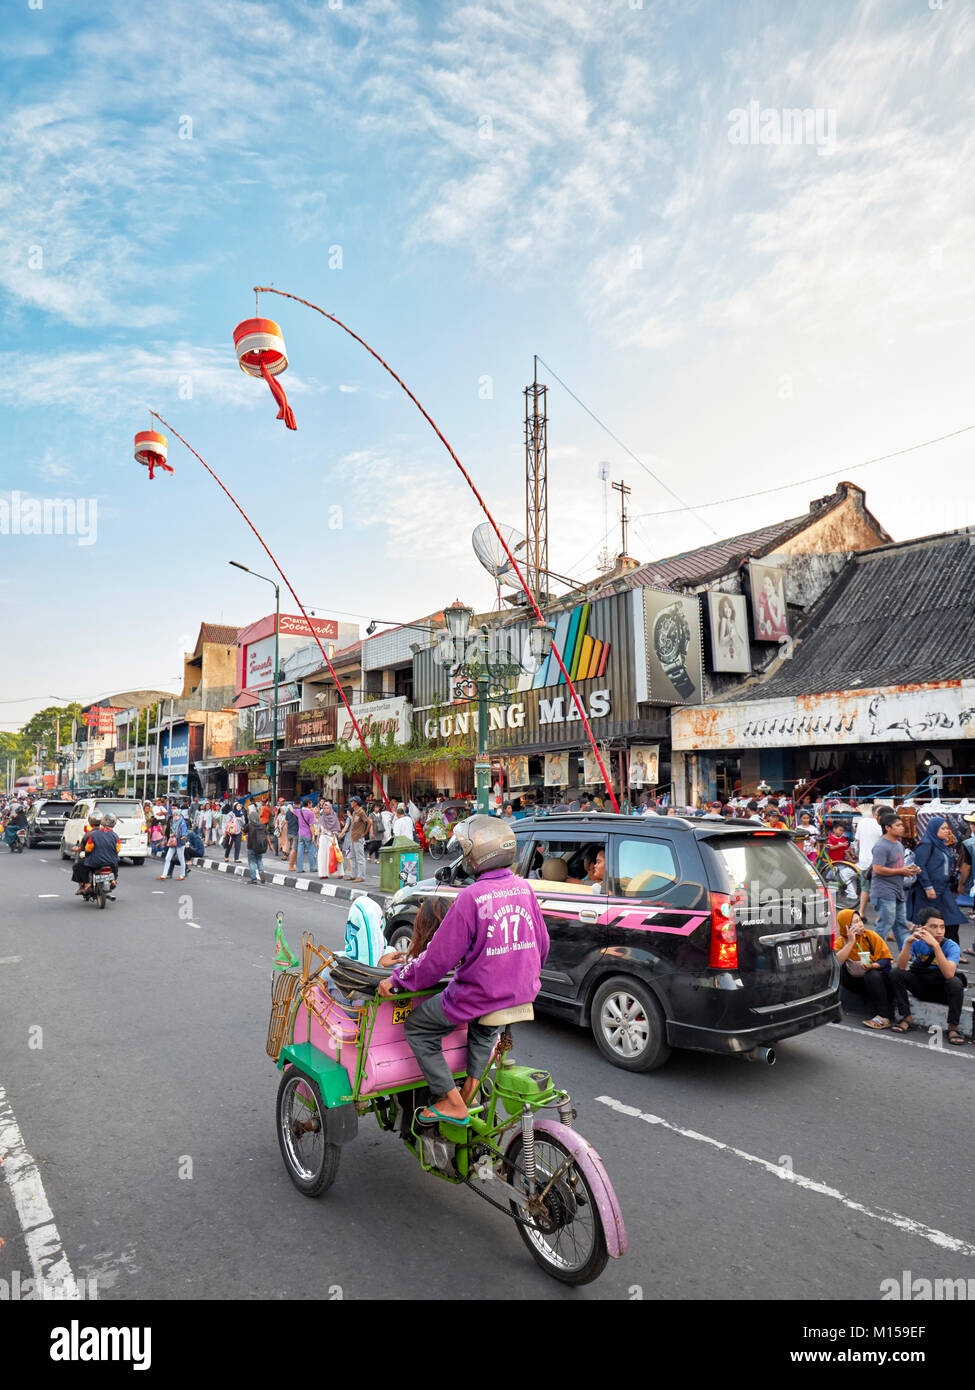 Le trafic sur la rue Malioboro. Yogyakarta, Java, Indonésie. Banque D'Images